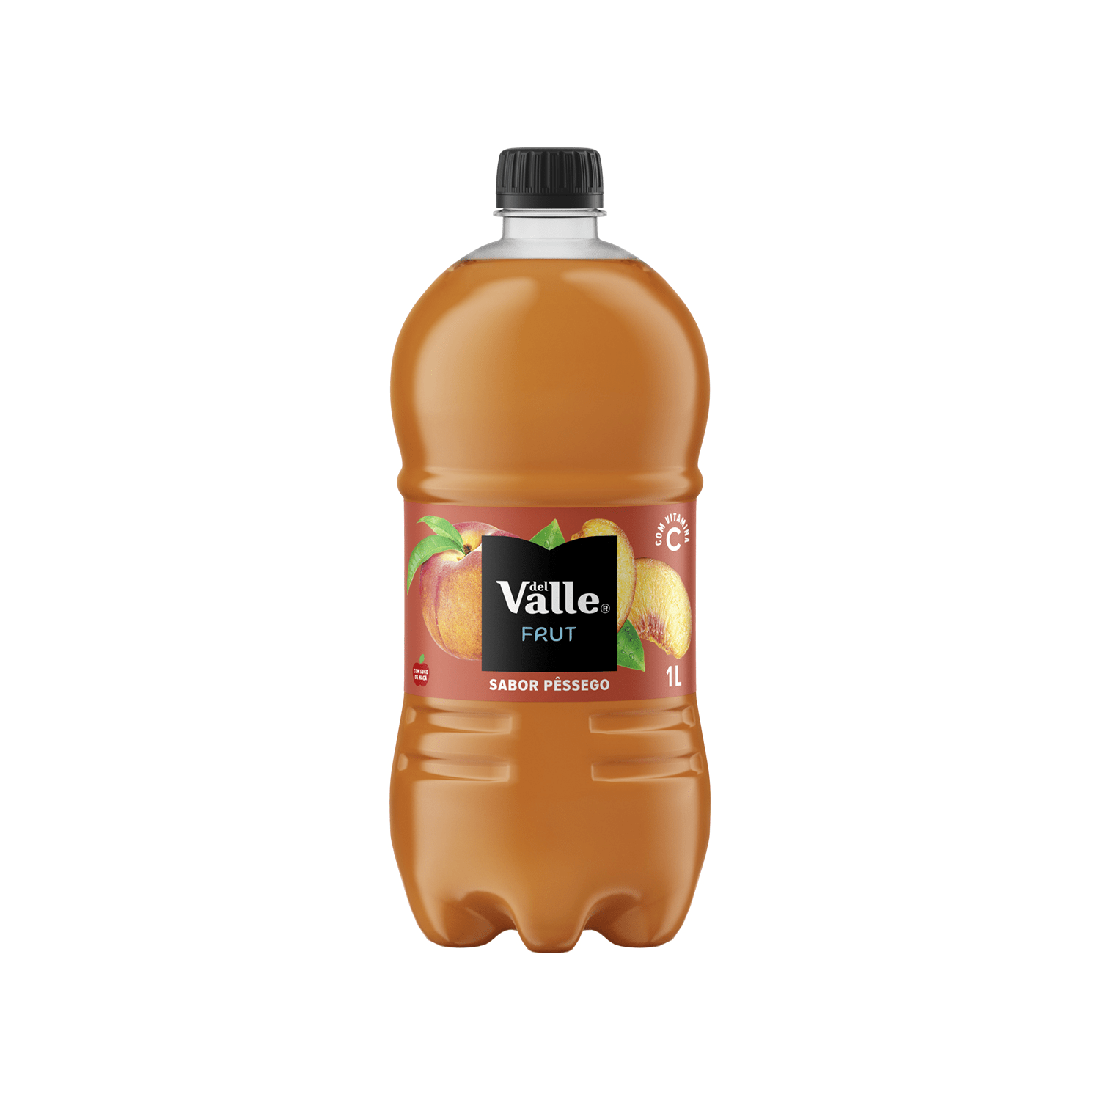 Uma garrafa de Del Valle Frut Sabor Pêssego